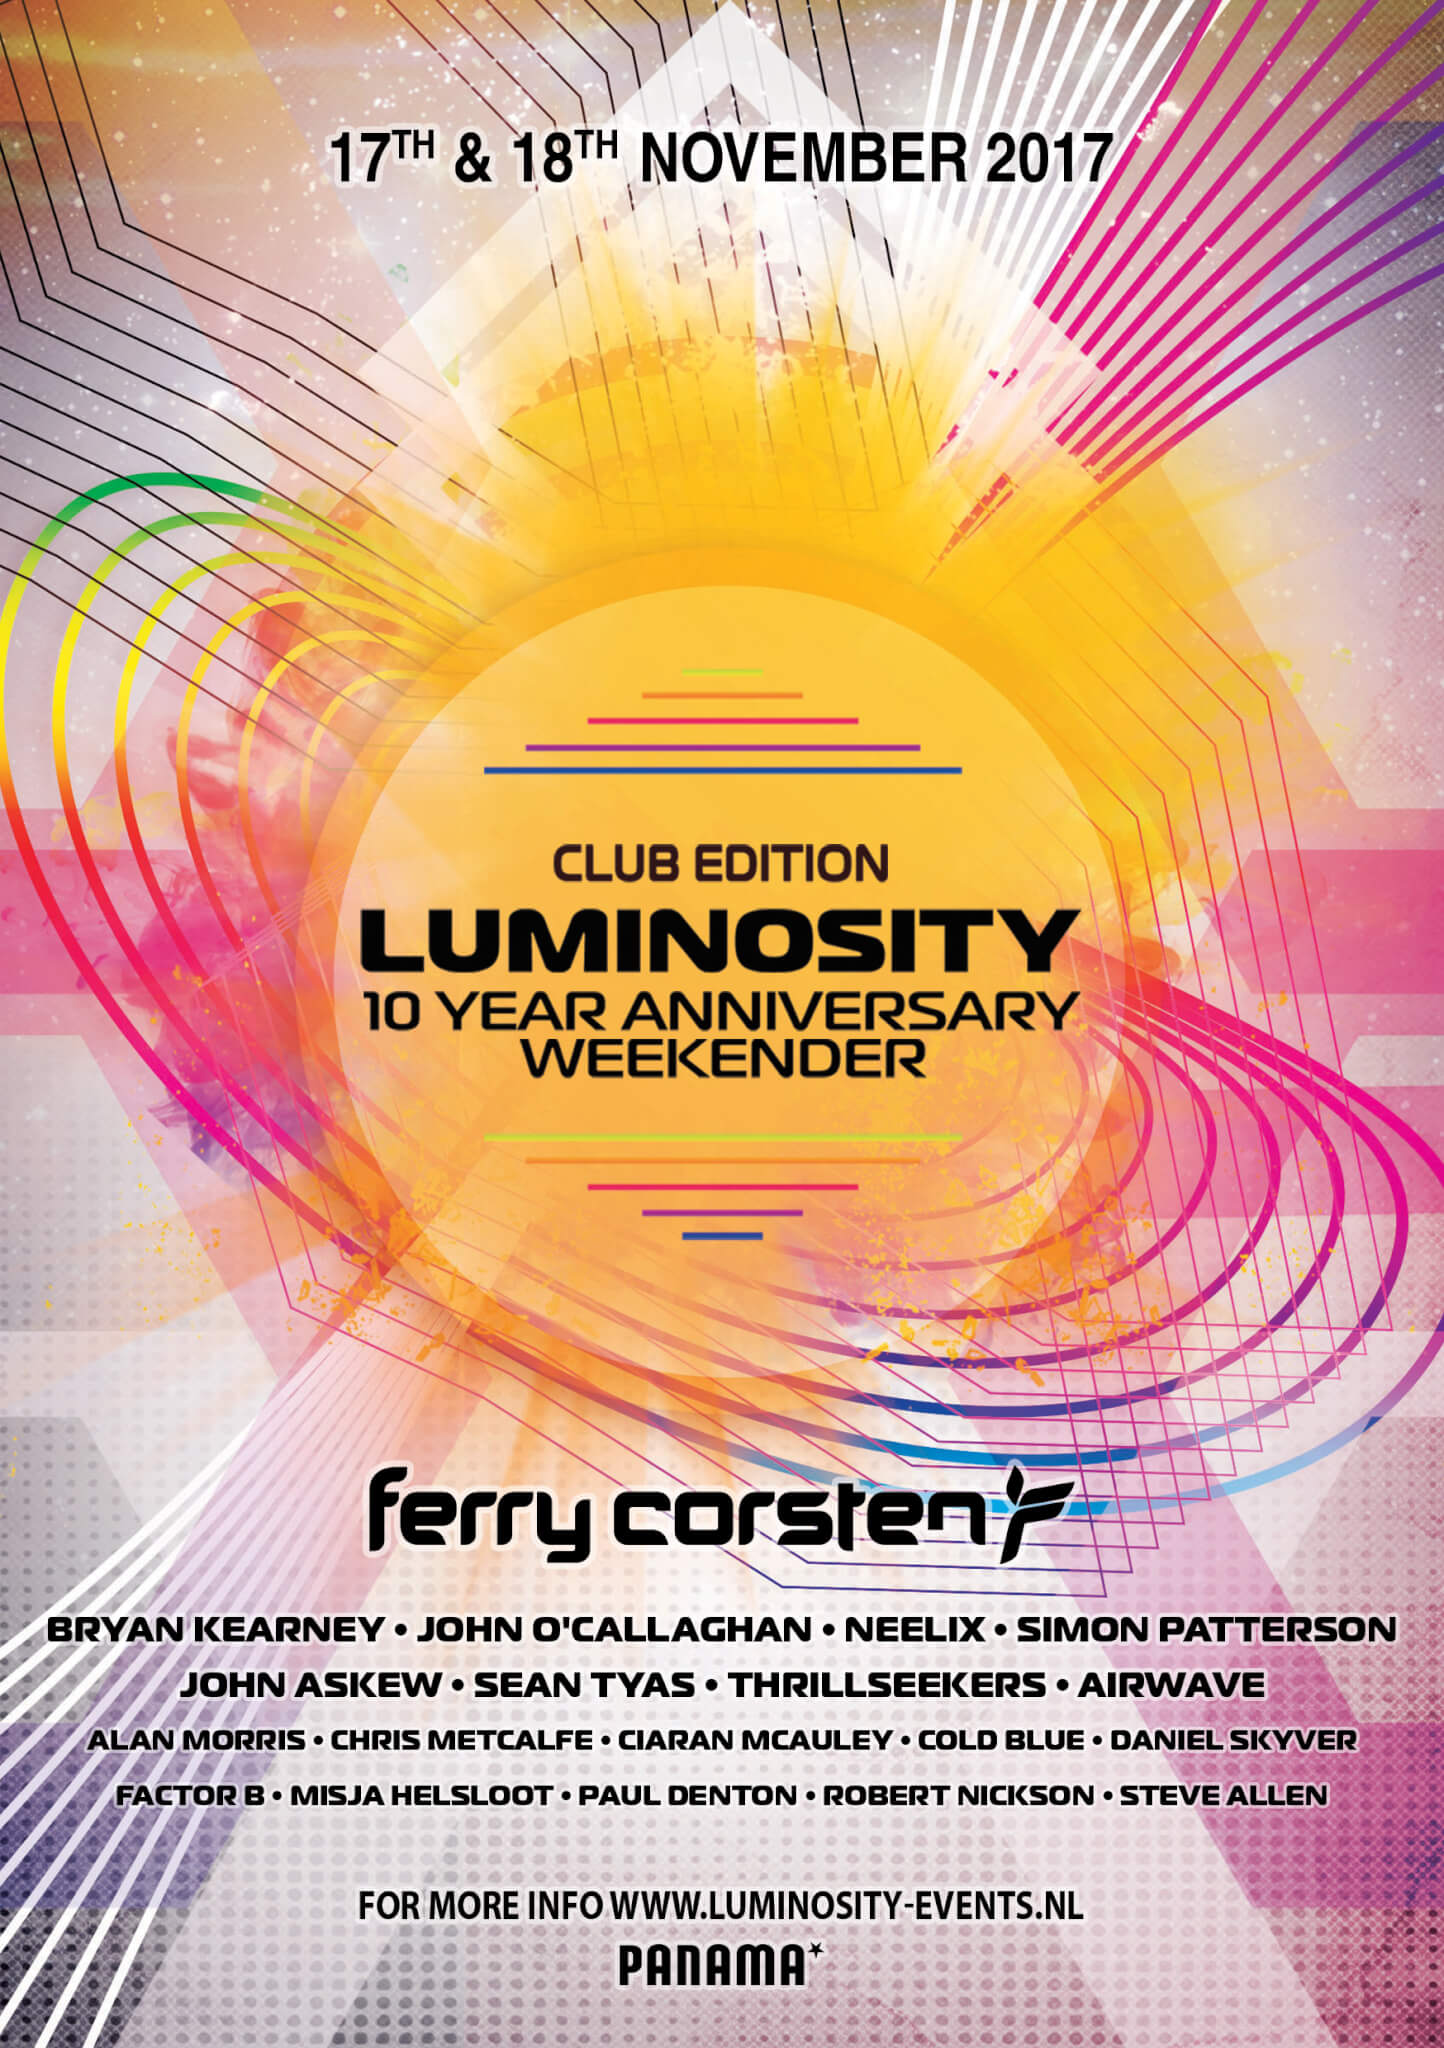 Luminosity Events presents Luminosity 10 Year Anniversary Weekender at Panama Club, Amsterdam, Netherlands on 17th and 18th of November 2017